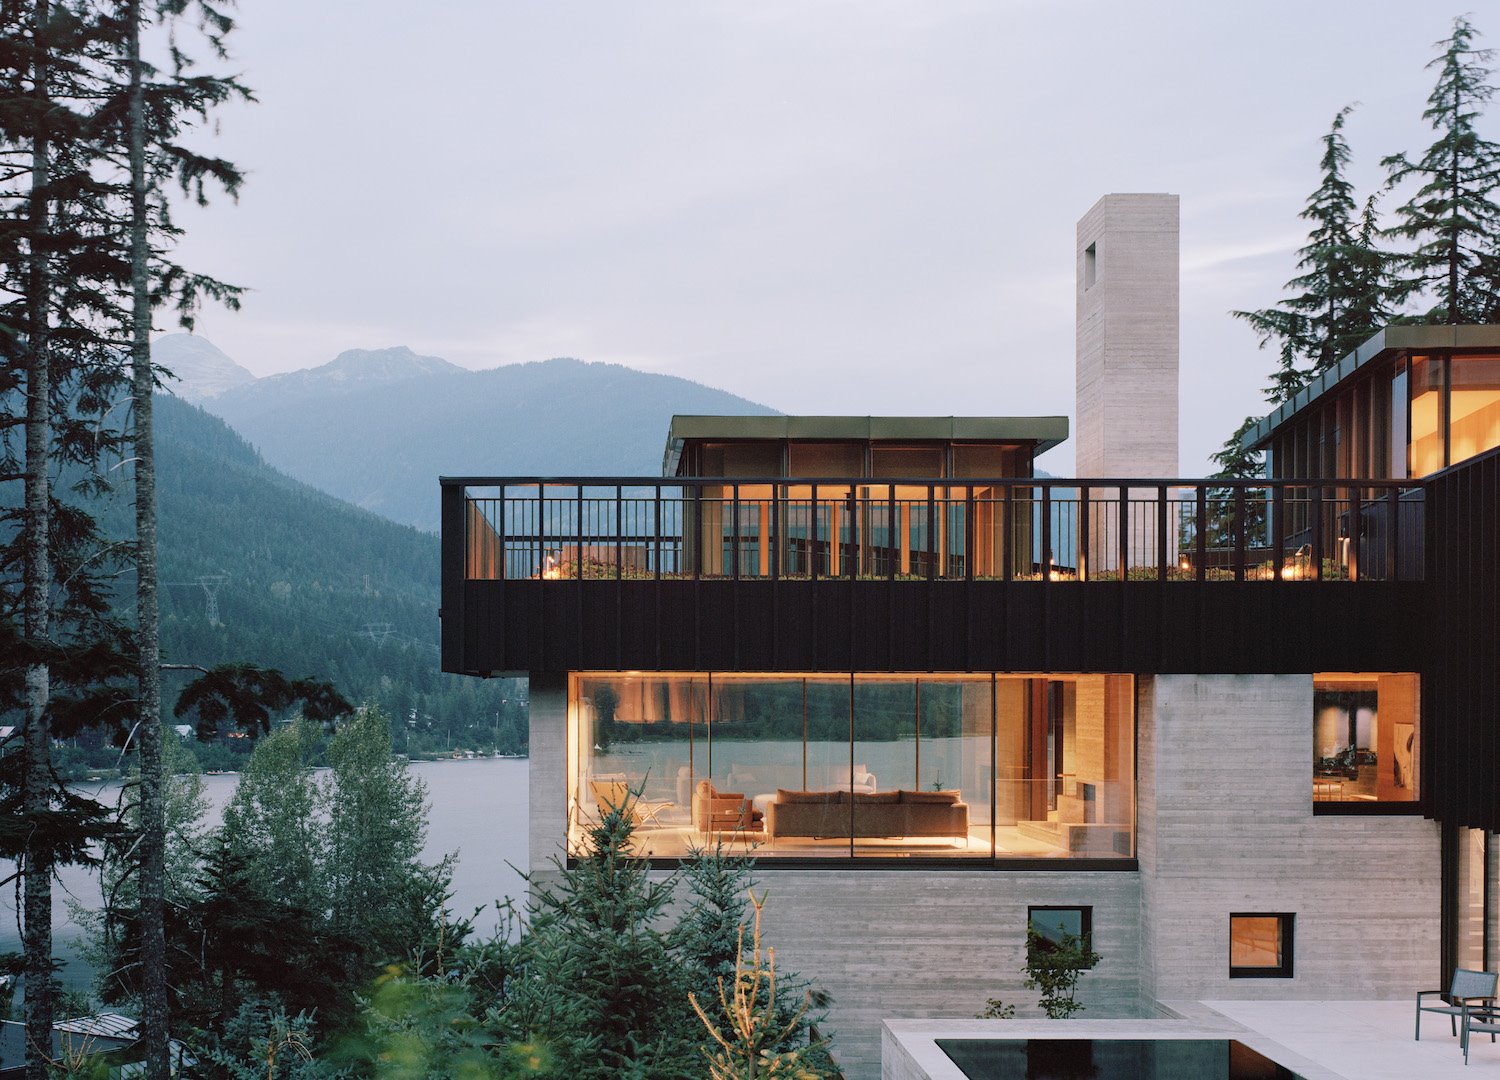 Casa moderna en los bosques de Canadá fachada iluminada